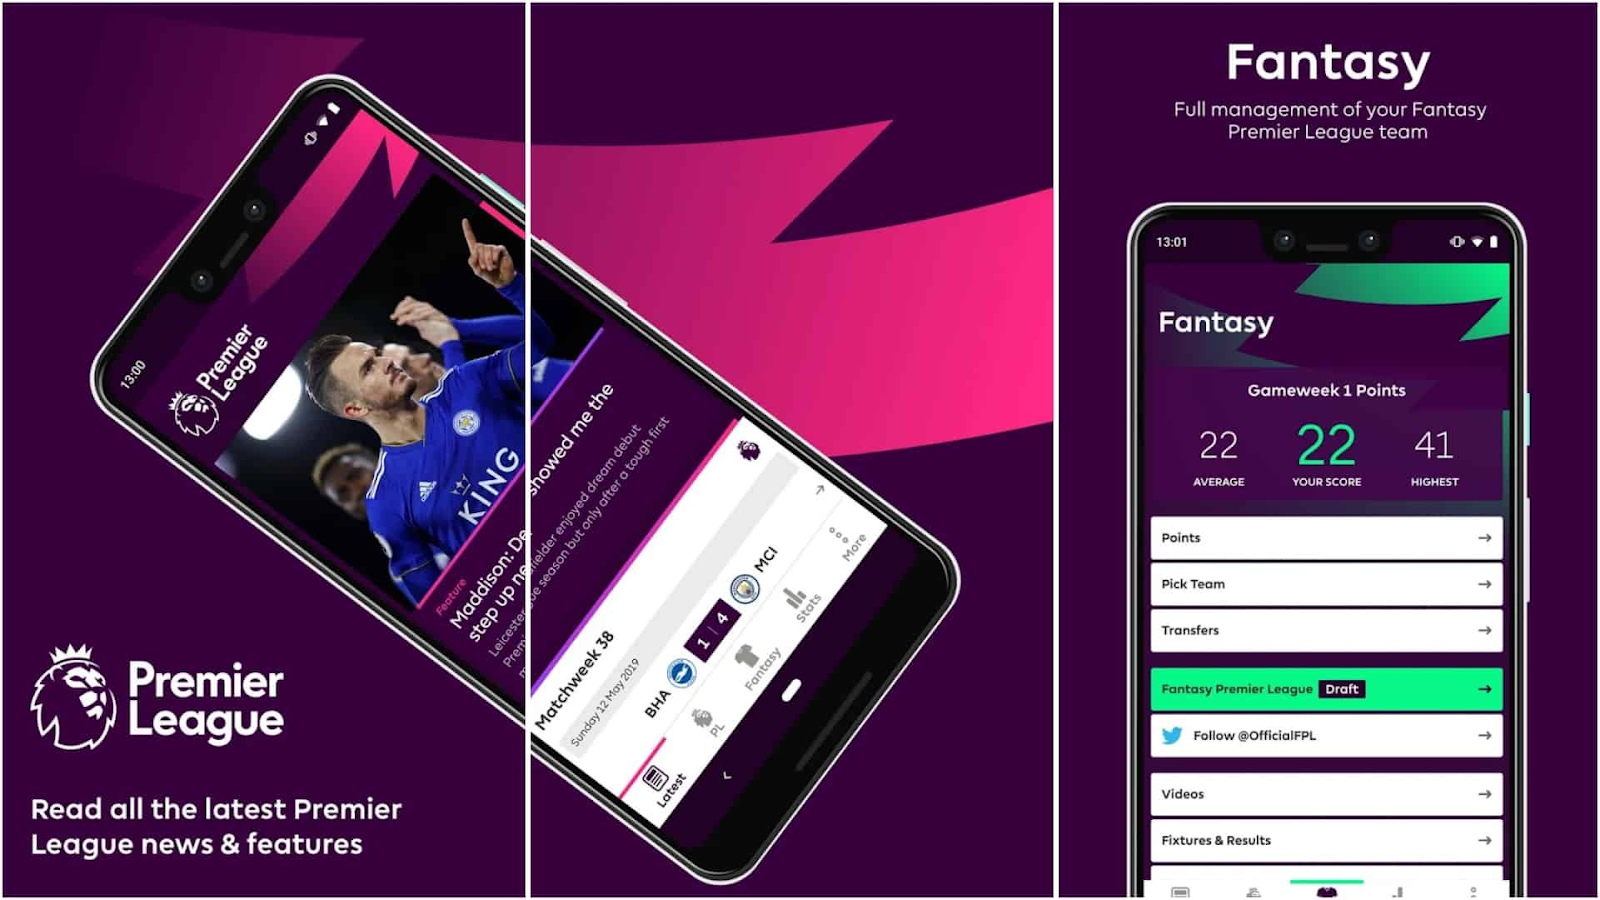 Premier League - Official App - Available for Free